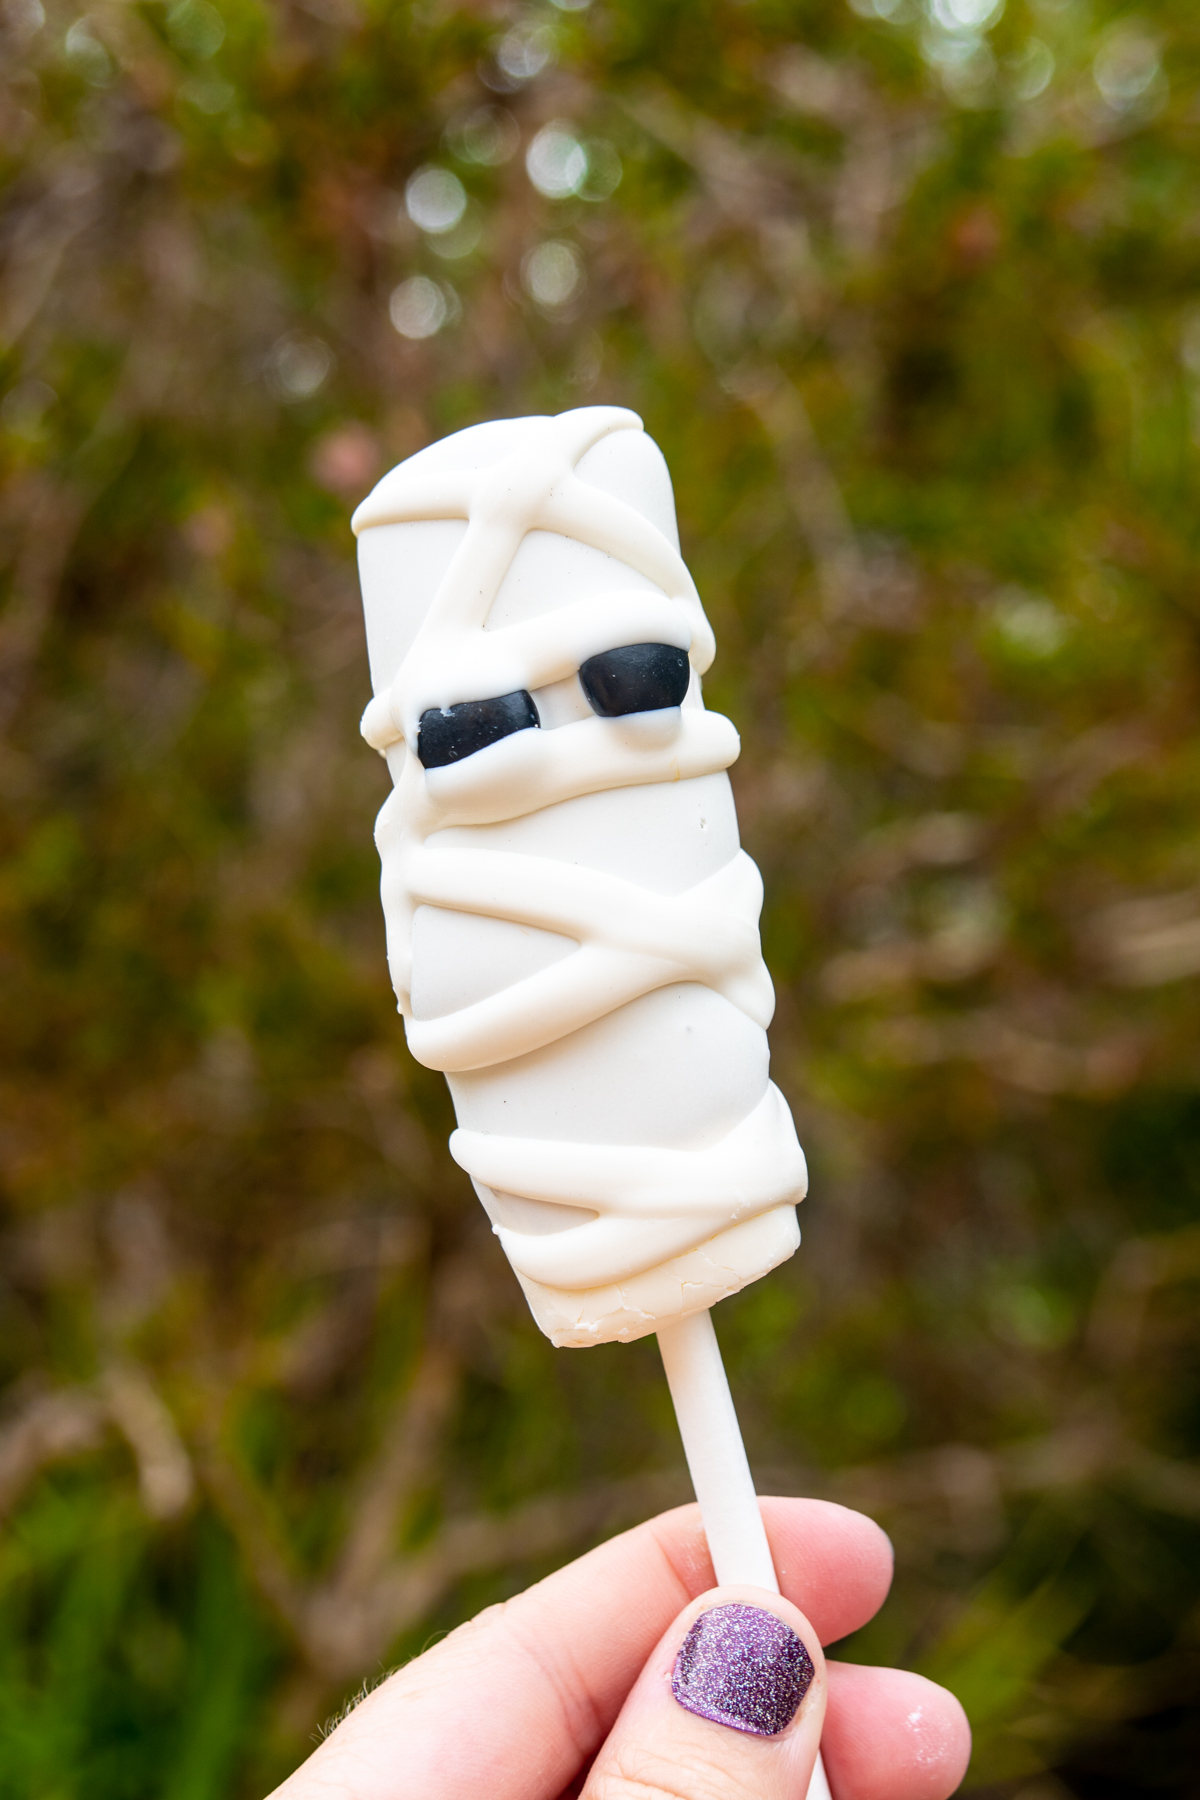 mummy marshmallow wand in someone's hand